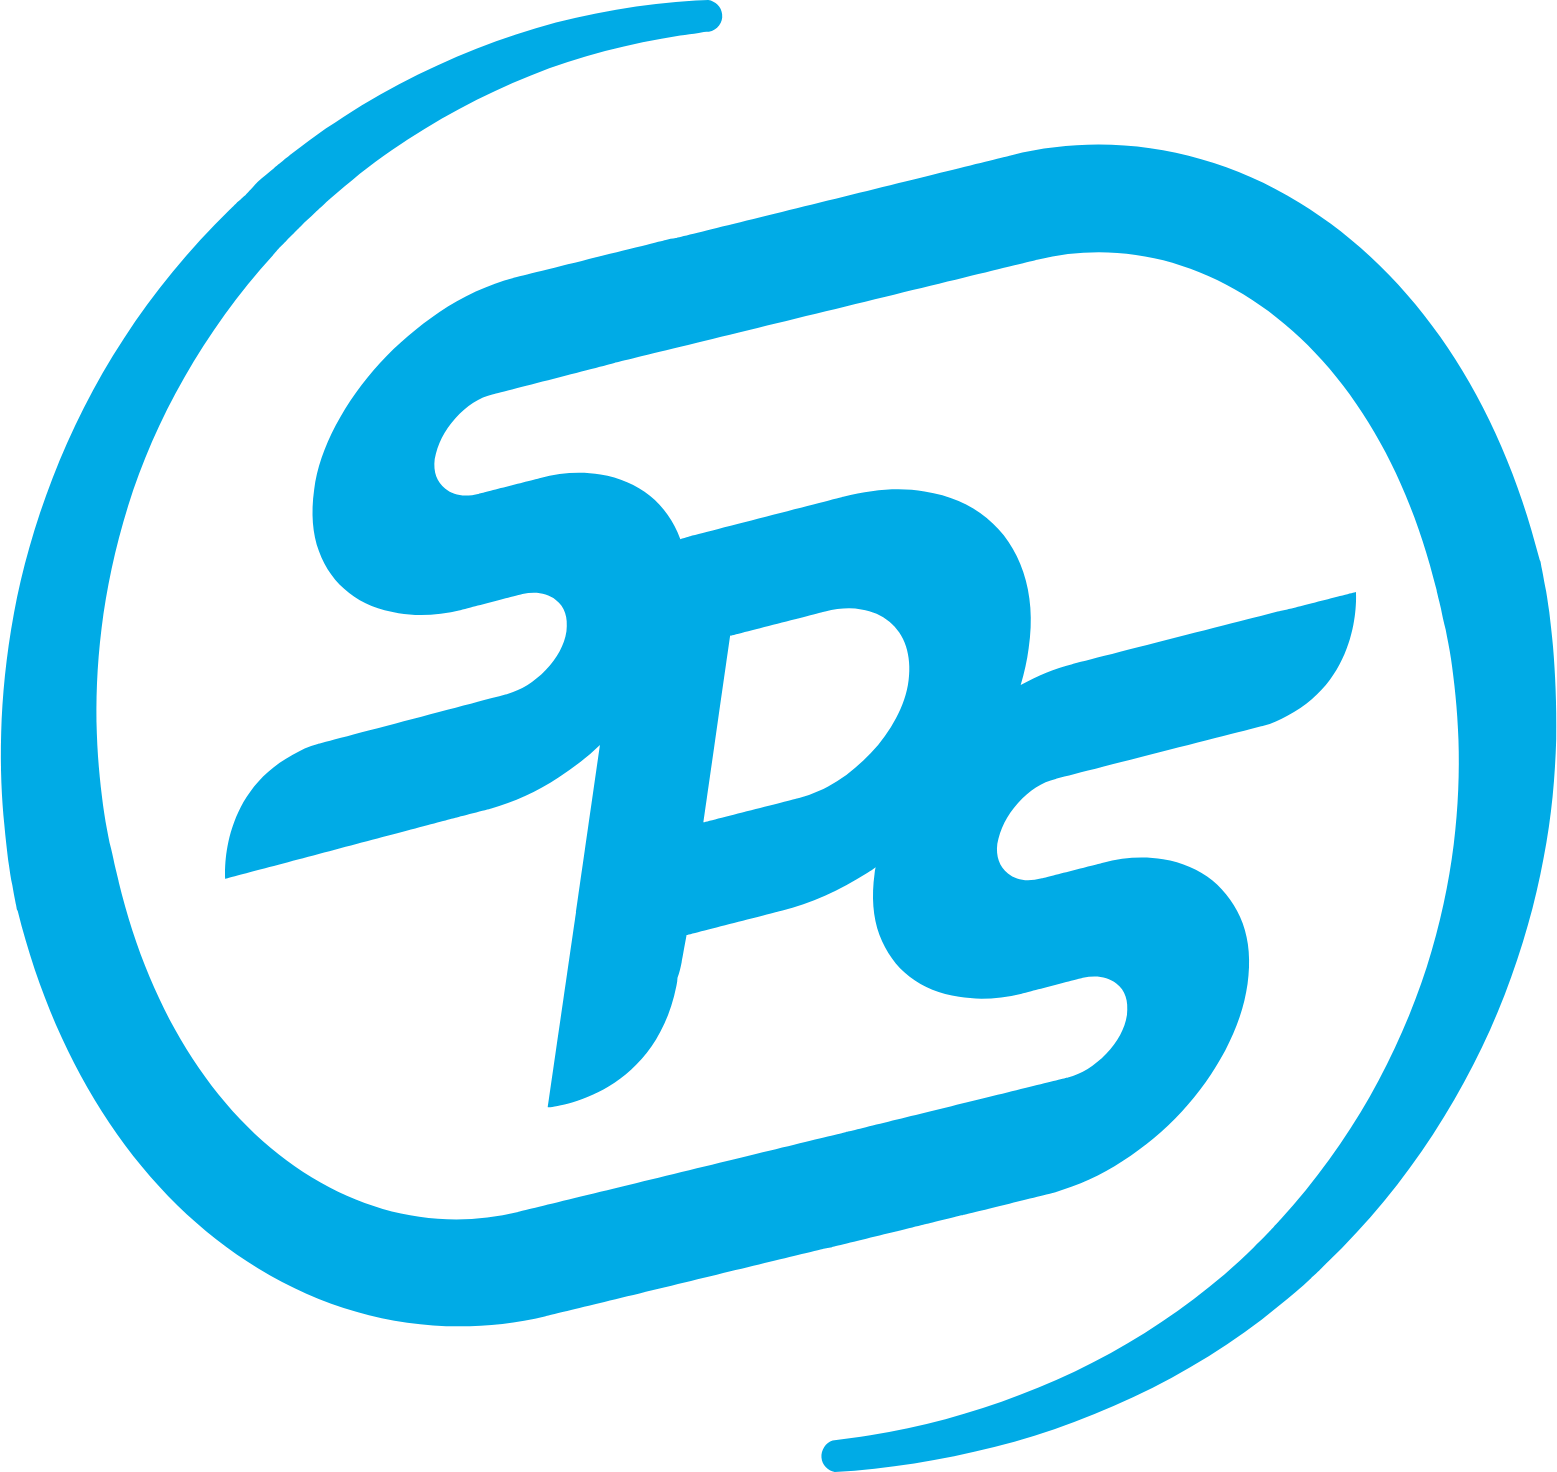 SPS letter logo design in illustration. Vector logo, calligraphy designs  for logo, Poster, Invitation, etc. | Letter logo design, Letter logo,  Vector logo